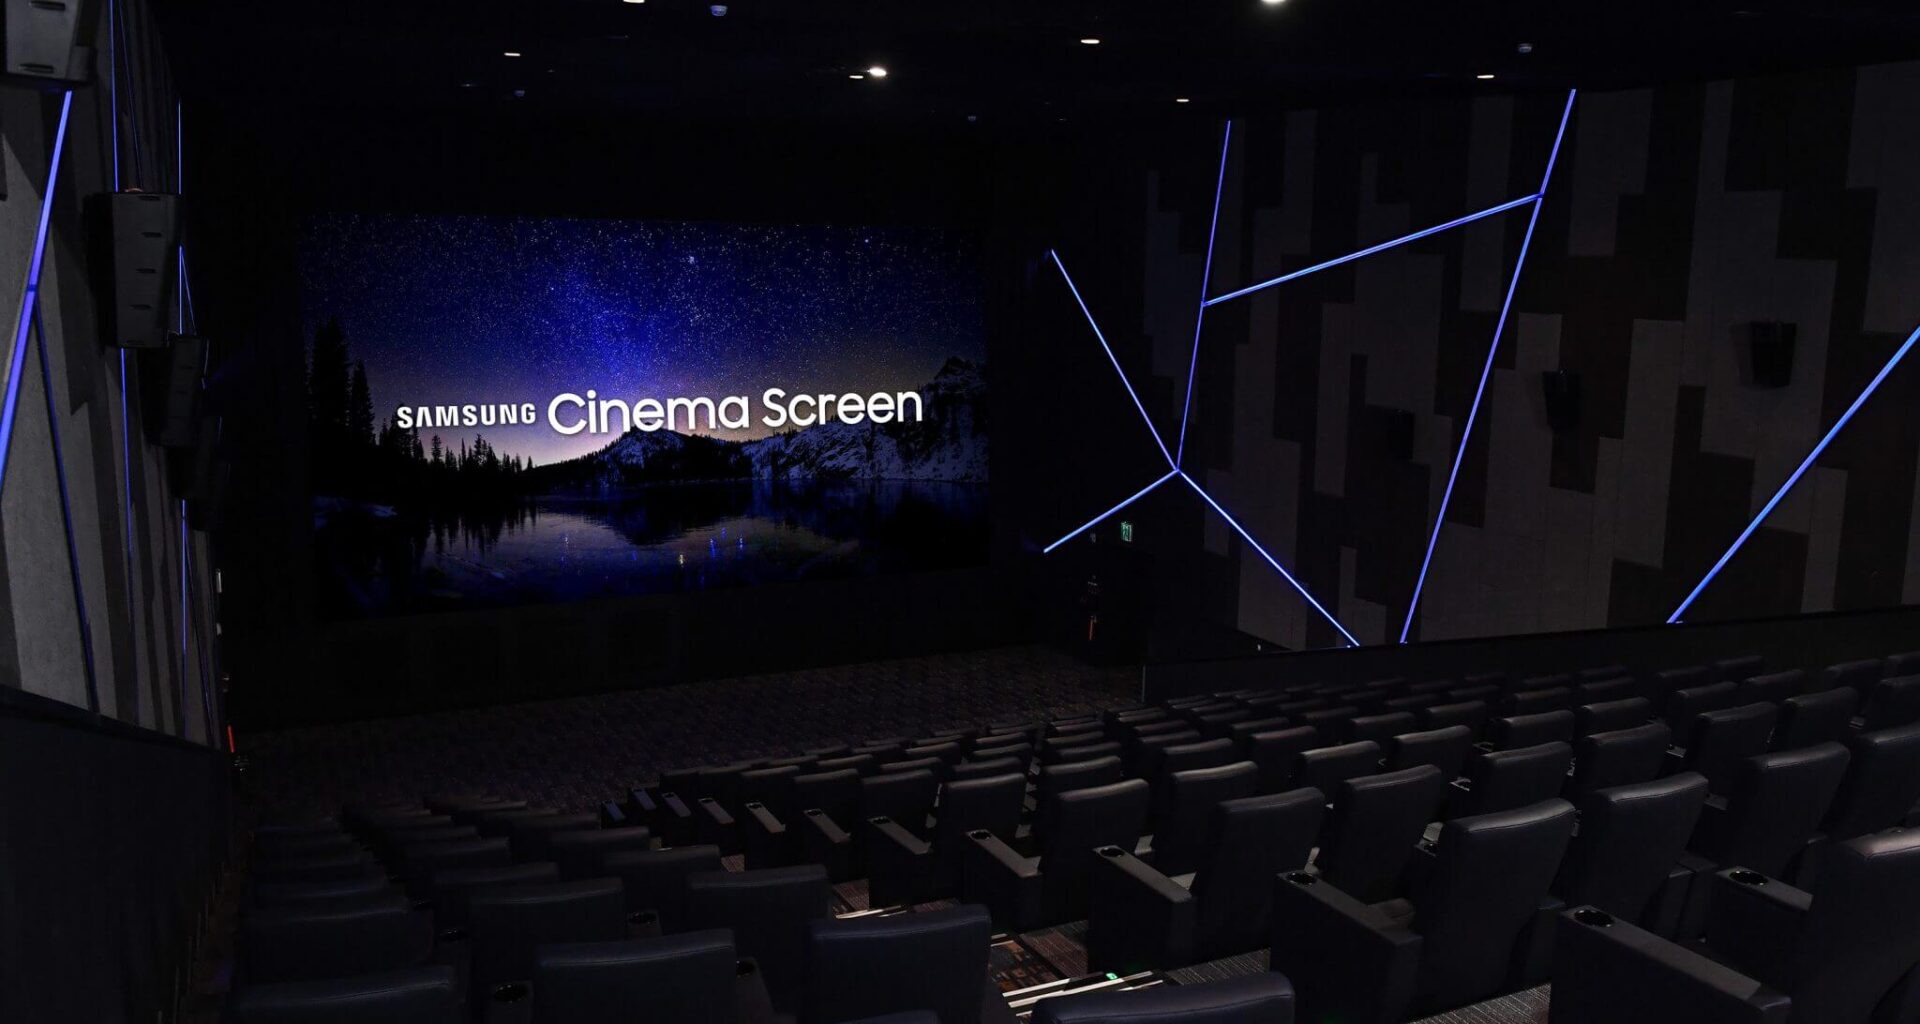 Cinema led screen photo for global press release 4